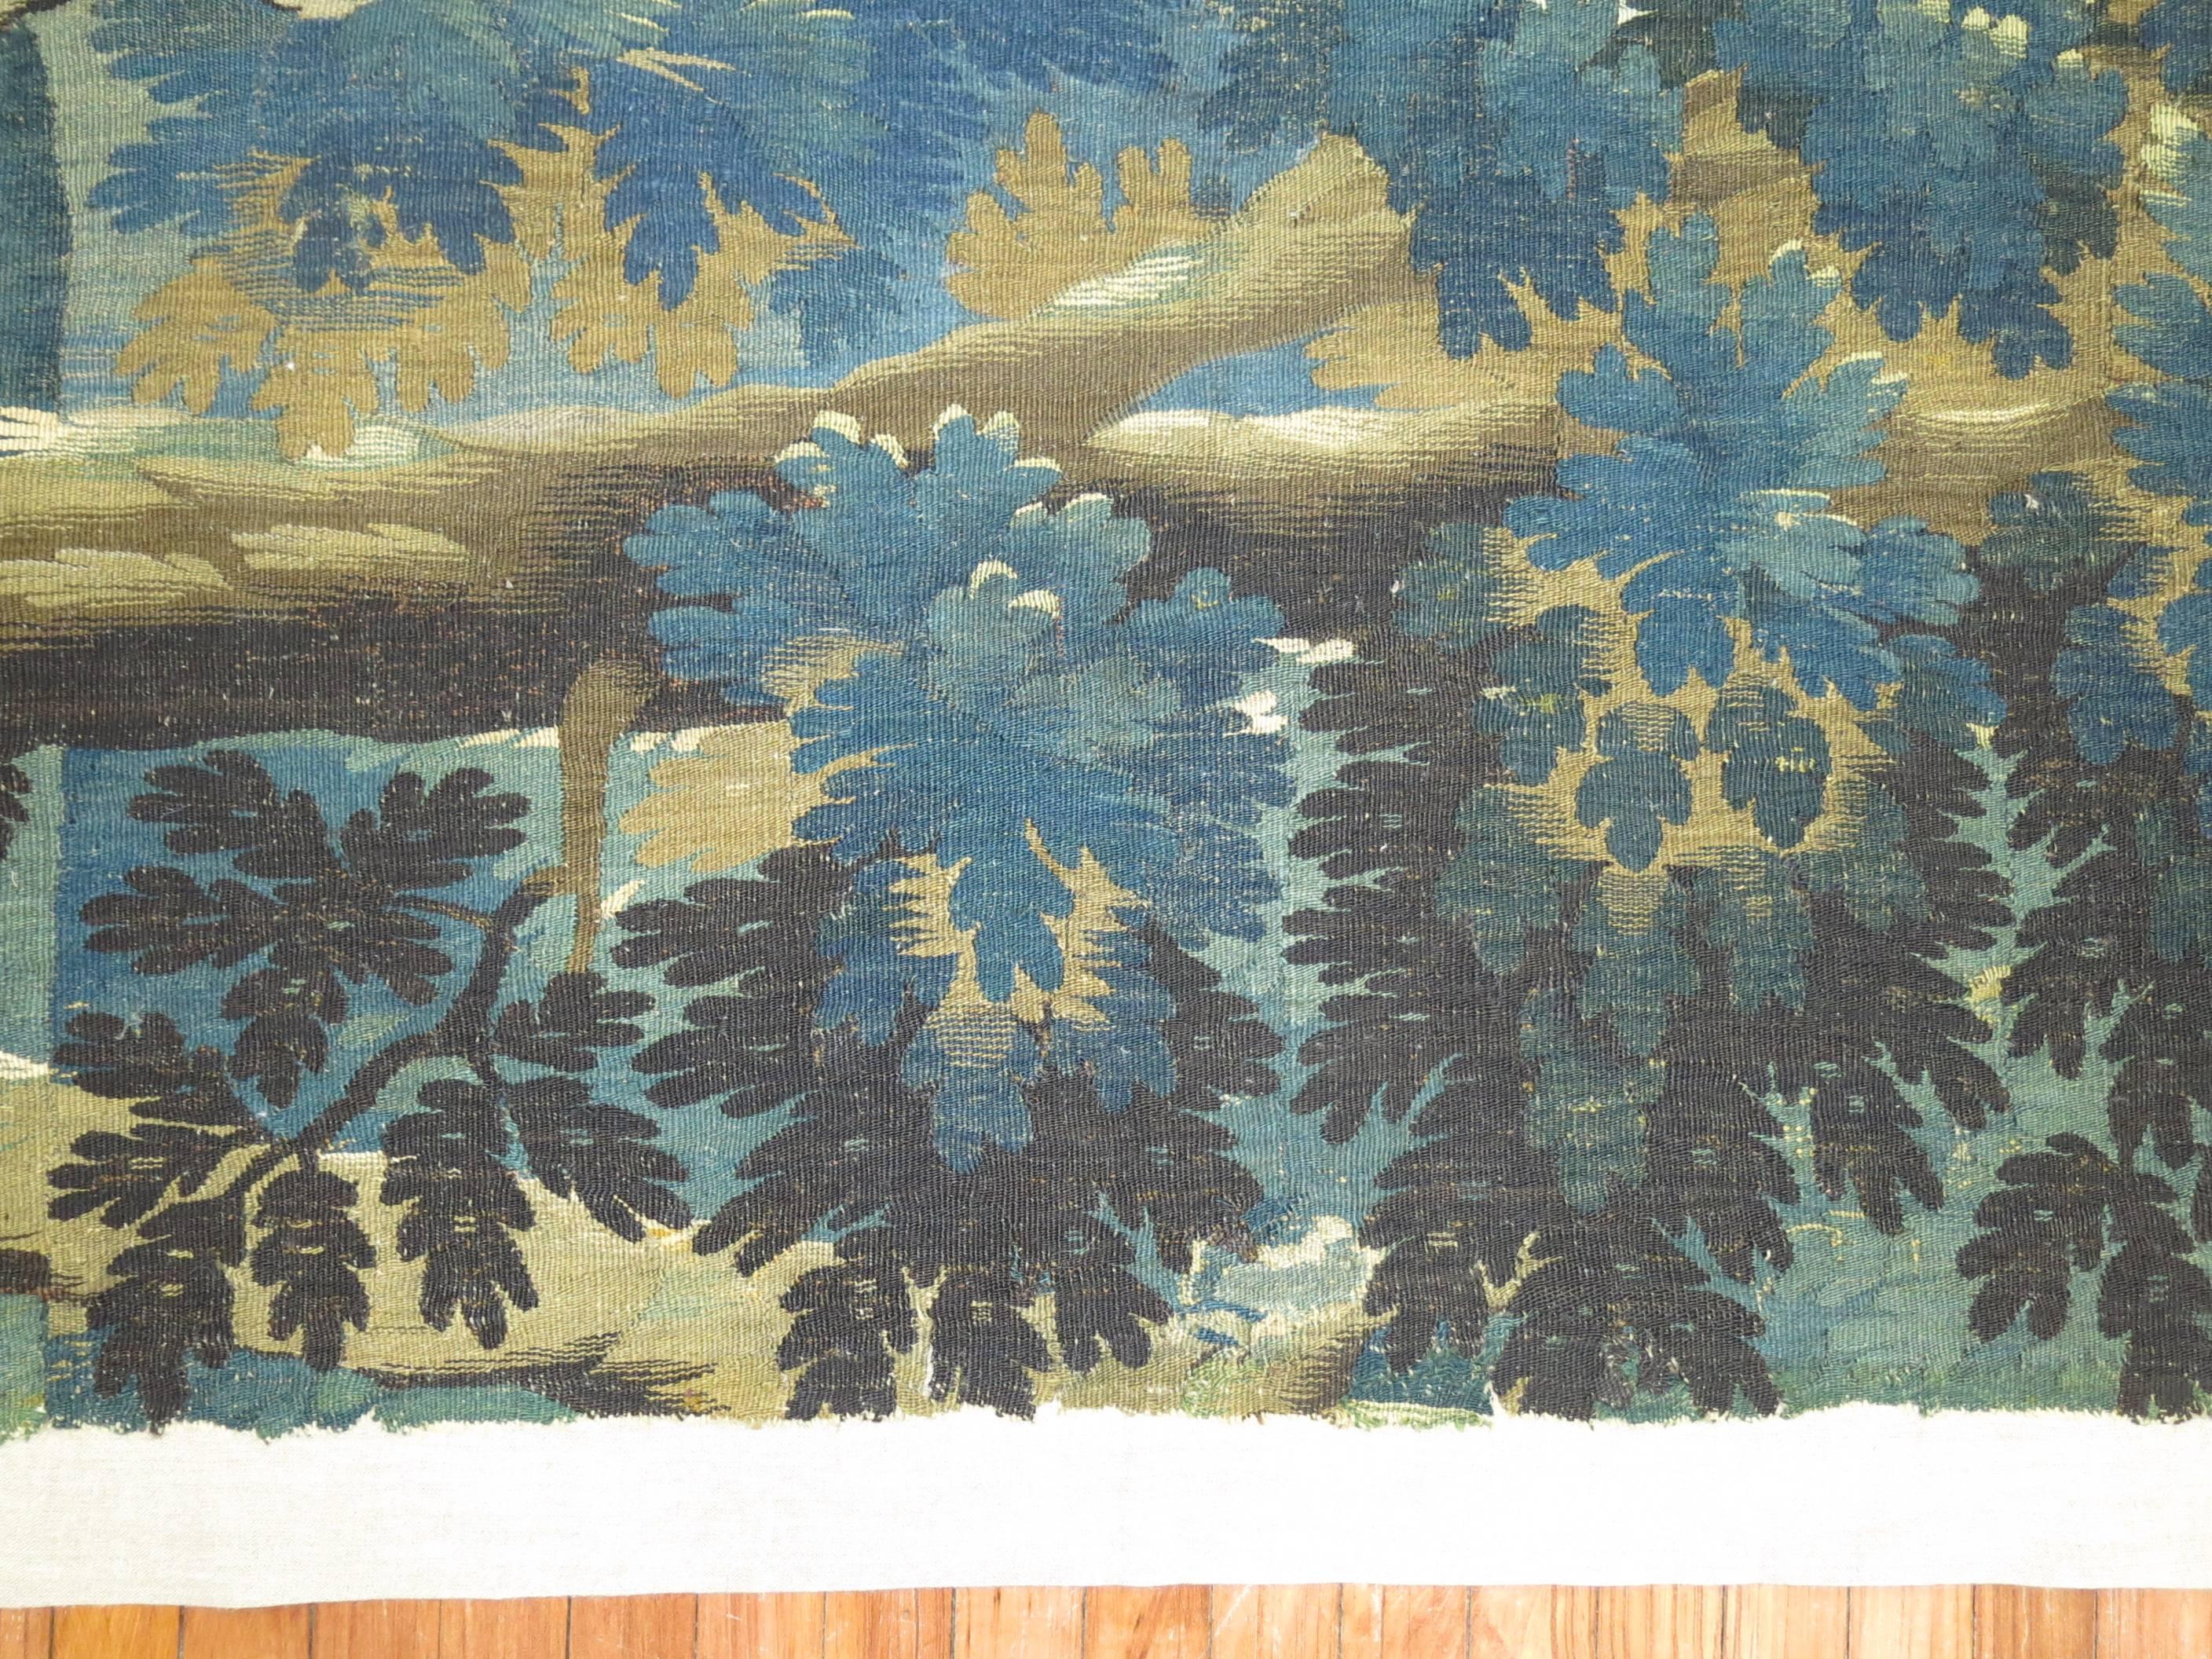 An 18th Century European Verdure Tapestry sewn on linen material

Tapestry 18th Century, woven on linen in 2017